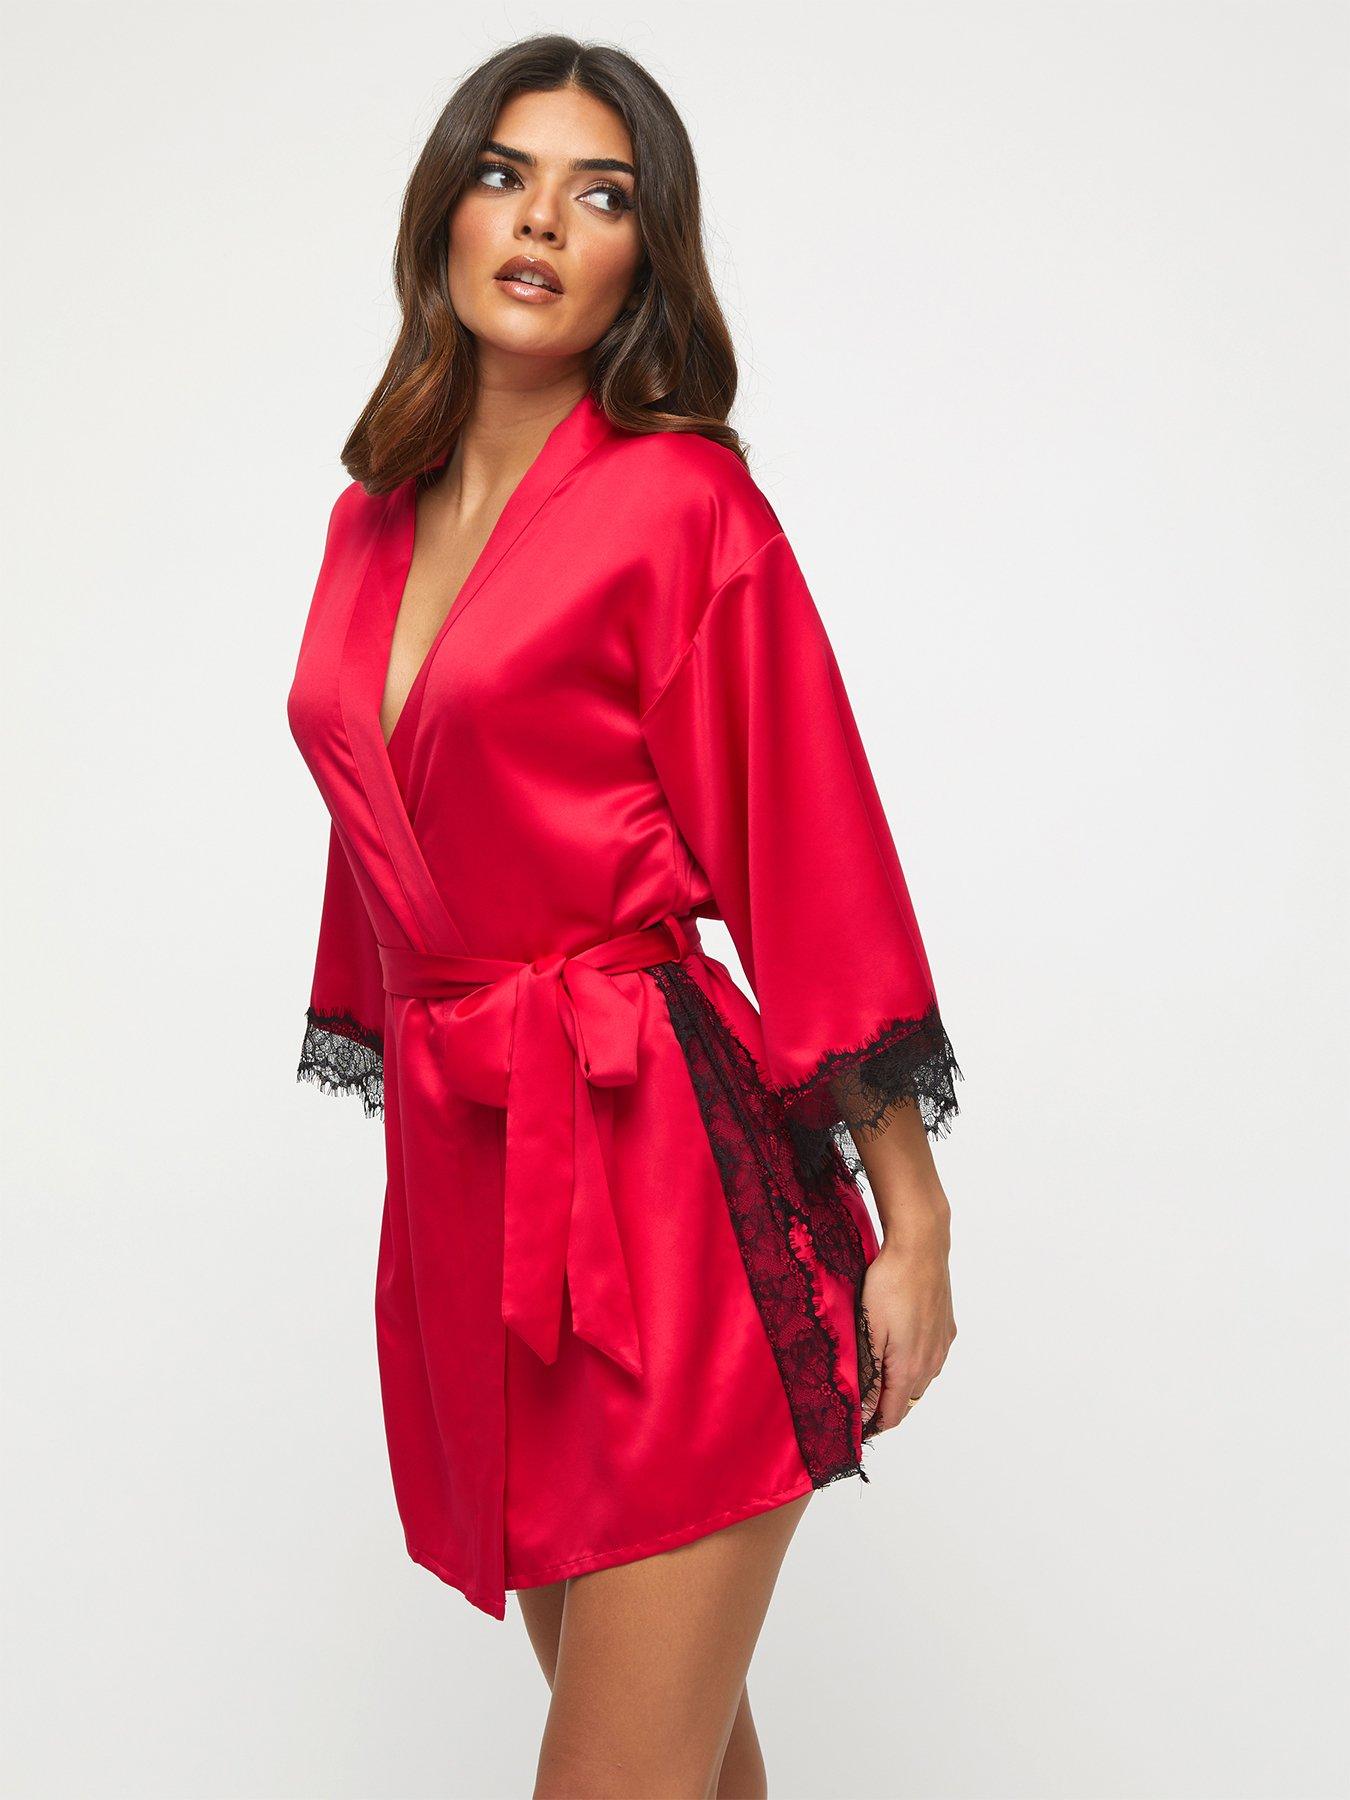 Ann Summers Nightwear & Loungewear Cherryann Planet Robe - Bright Red ...